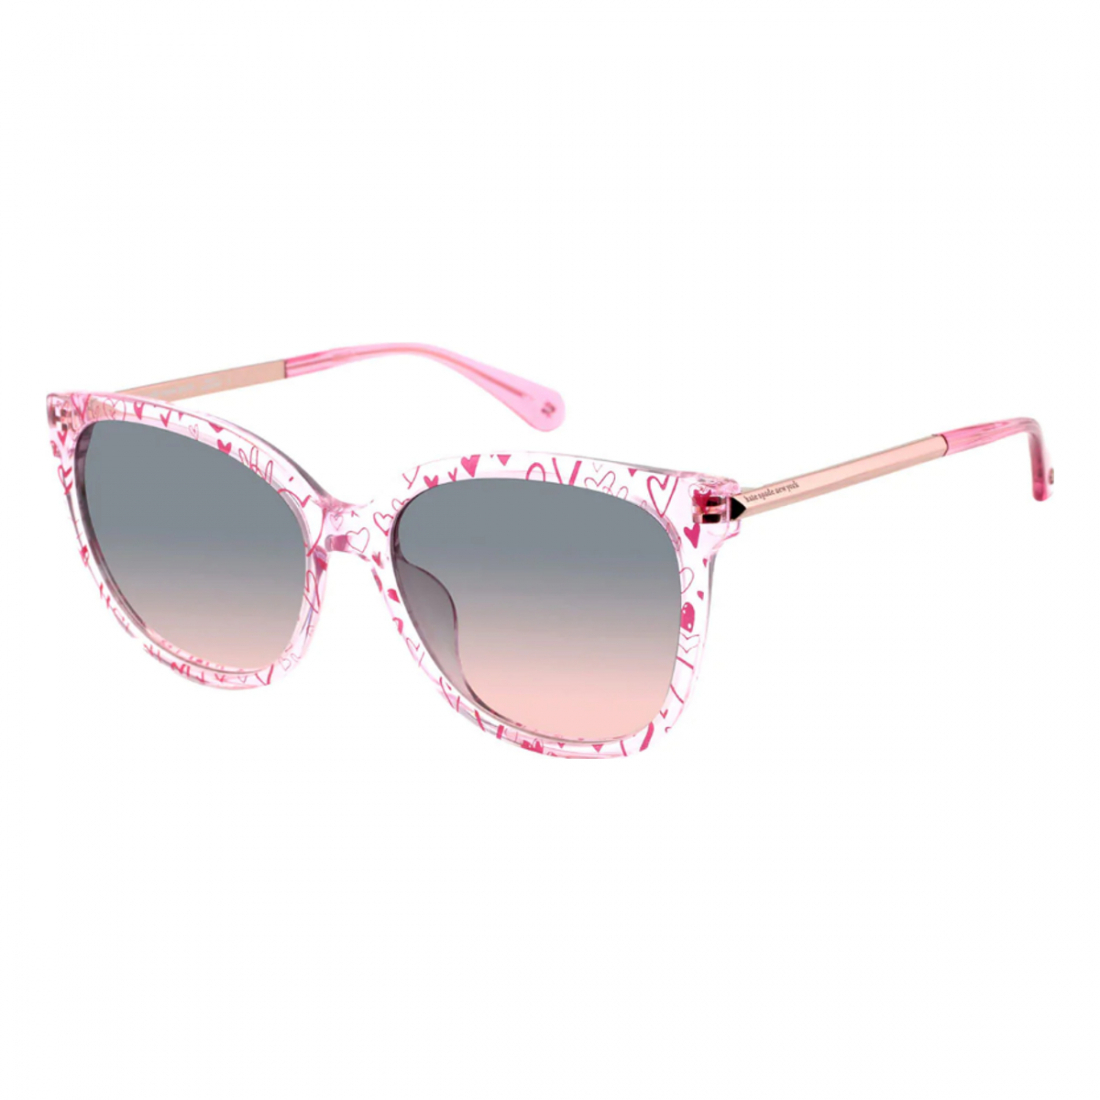 Women's 'BRITTON/G/S 0Q1Z' Sunglasses